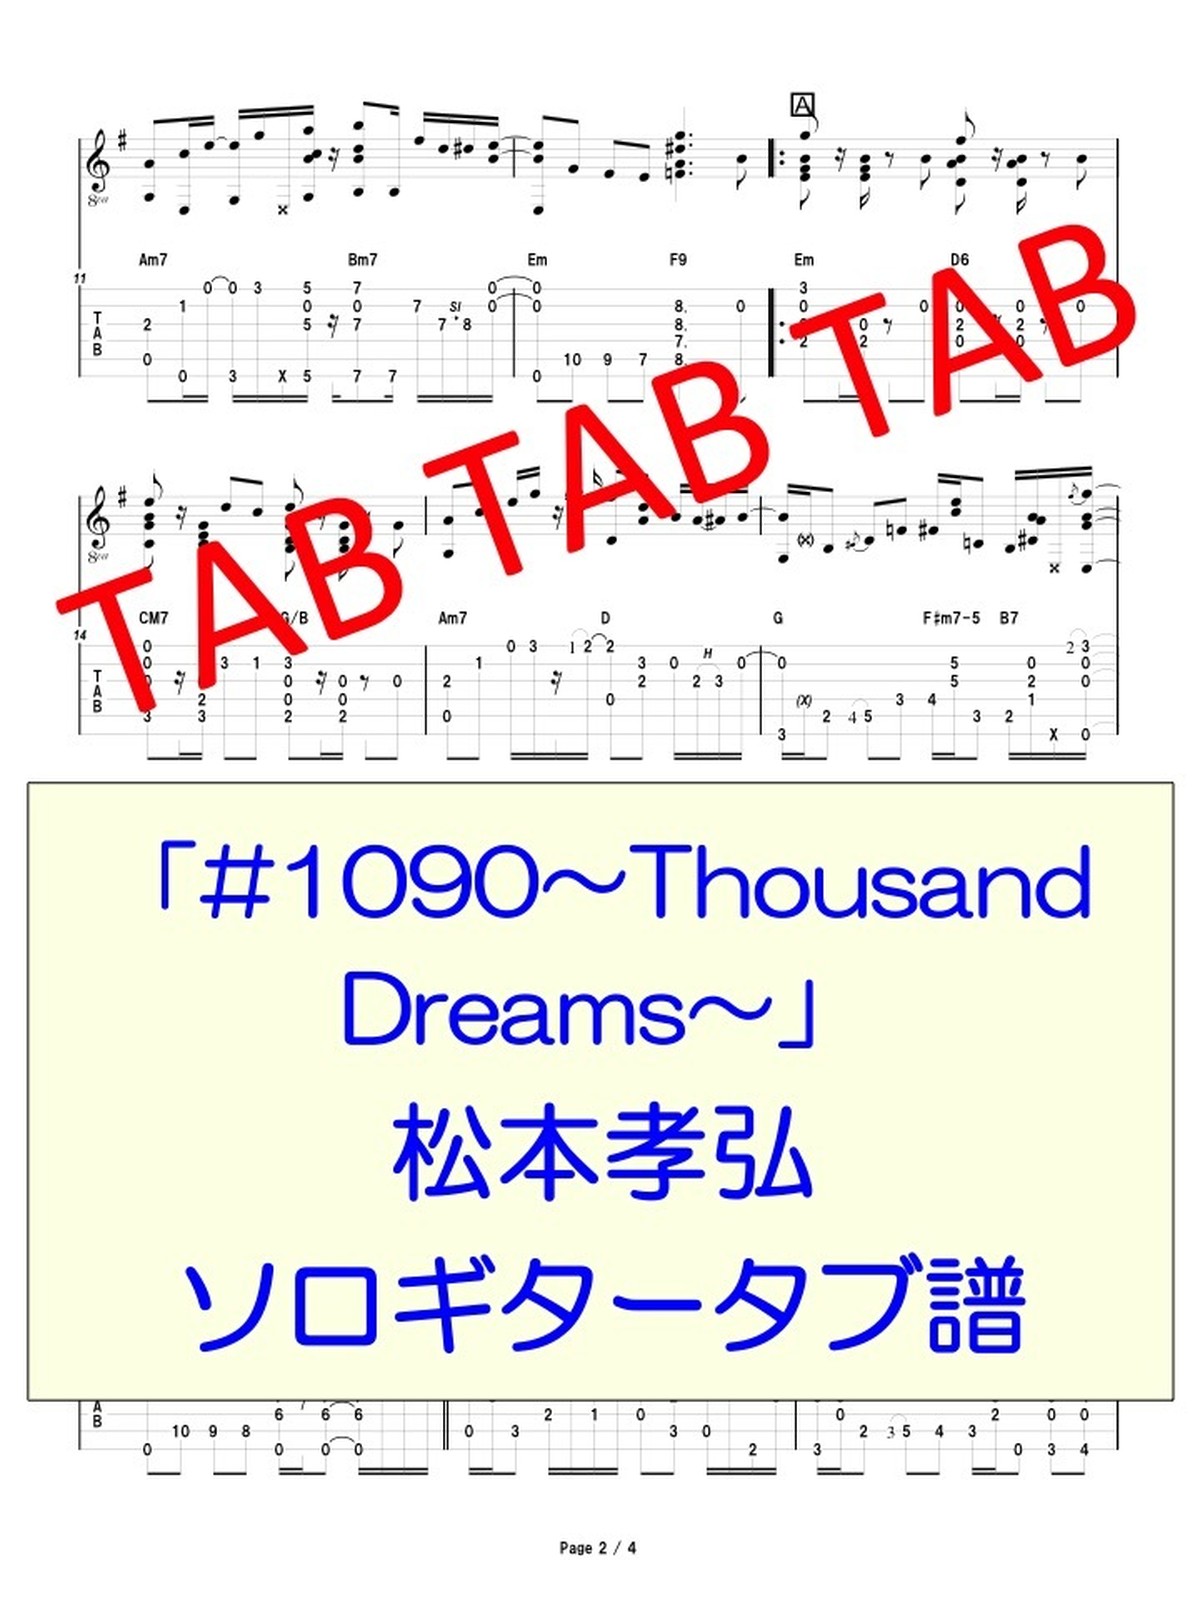 1090 Thousand Dreams 松本孝弘 ソロギタータブ譜 Ryuzo Store